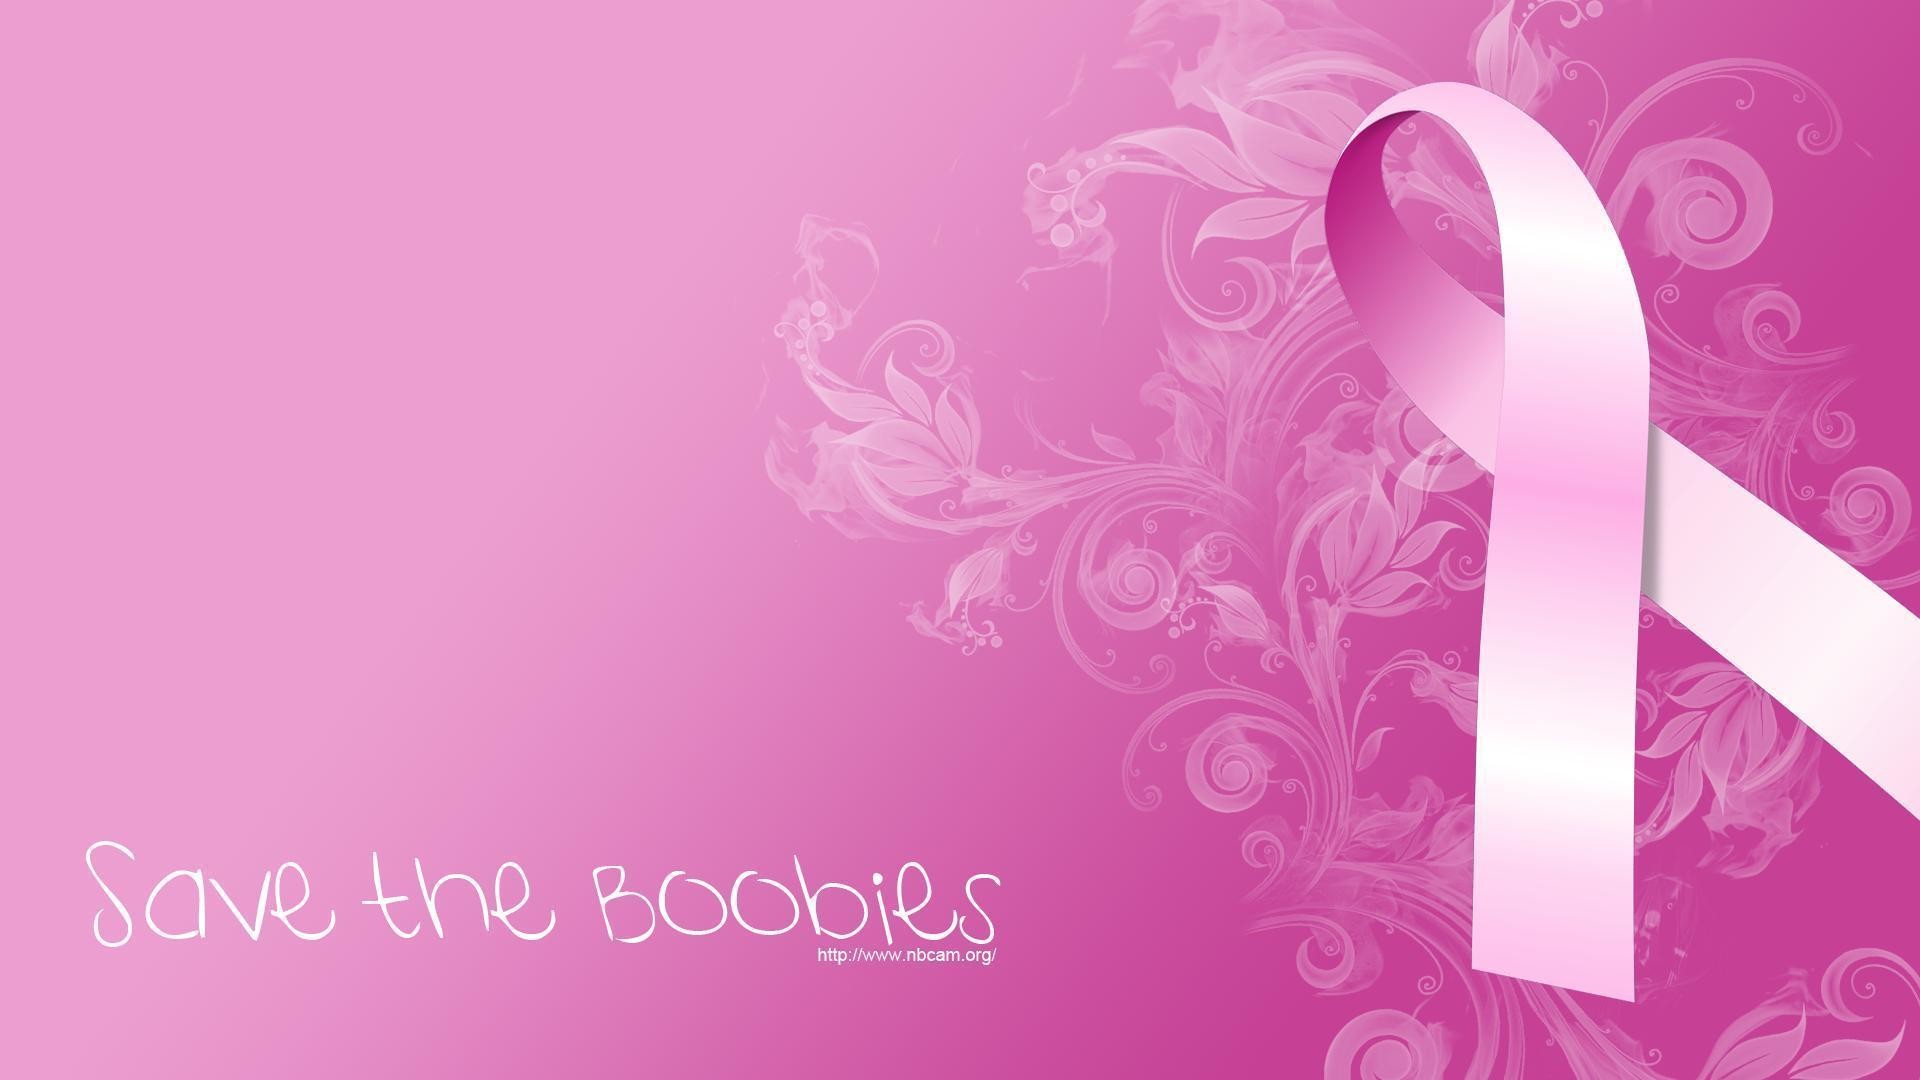 Pink Ribbon Wallpapers  Top Free Pink Ribbon Backgrounds  WallpaperAccess